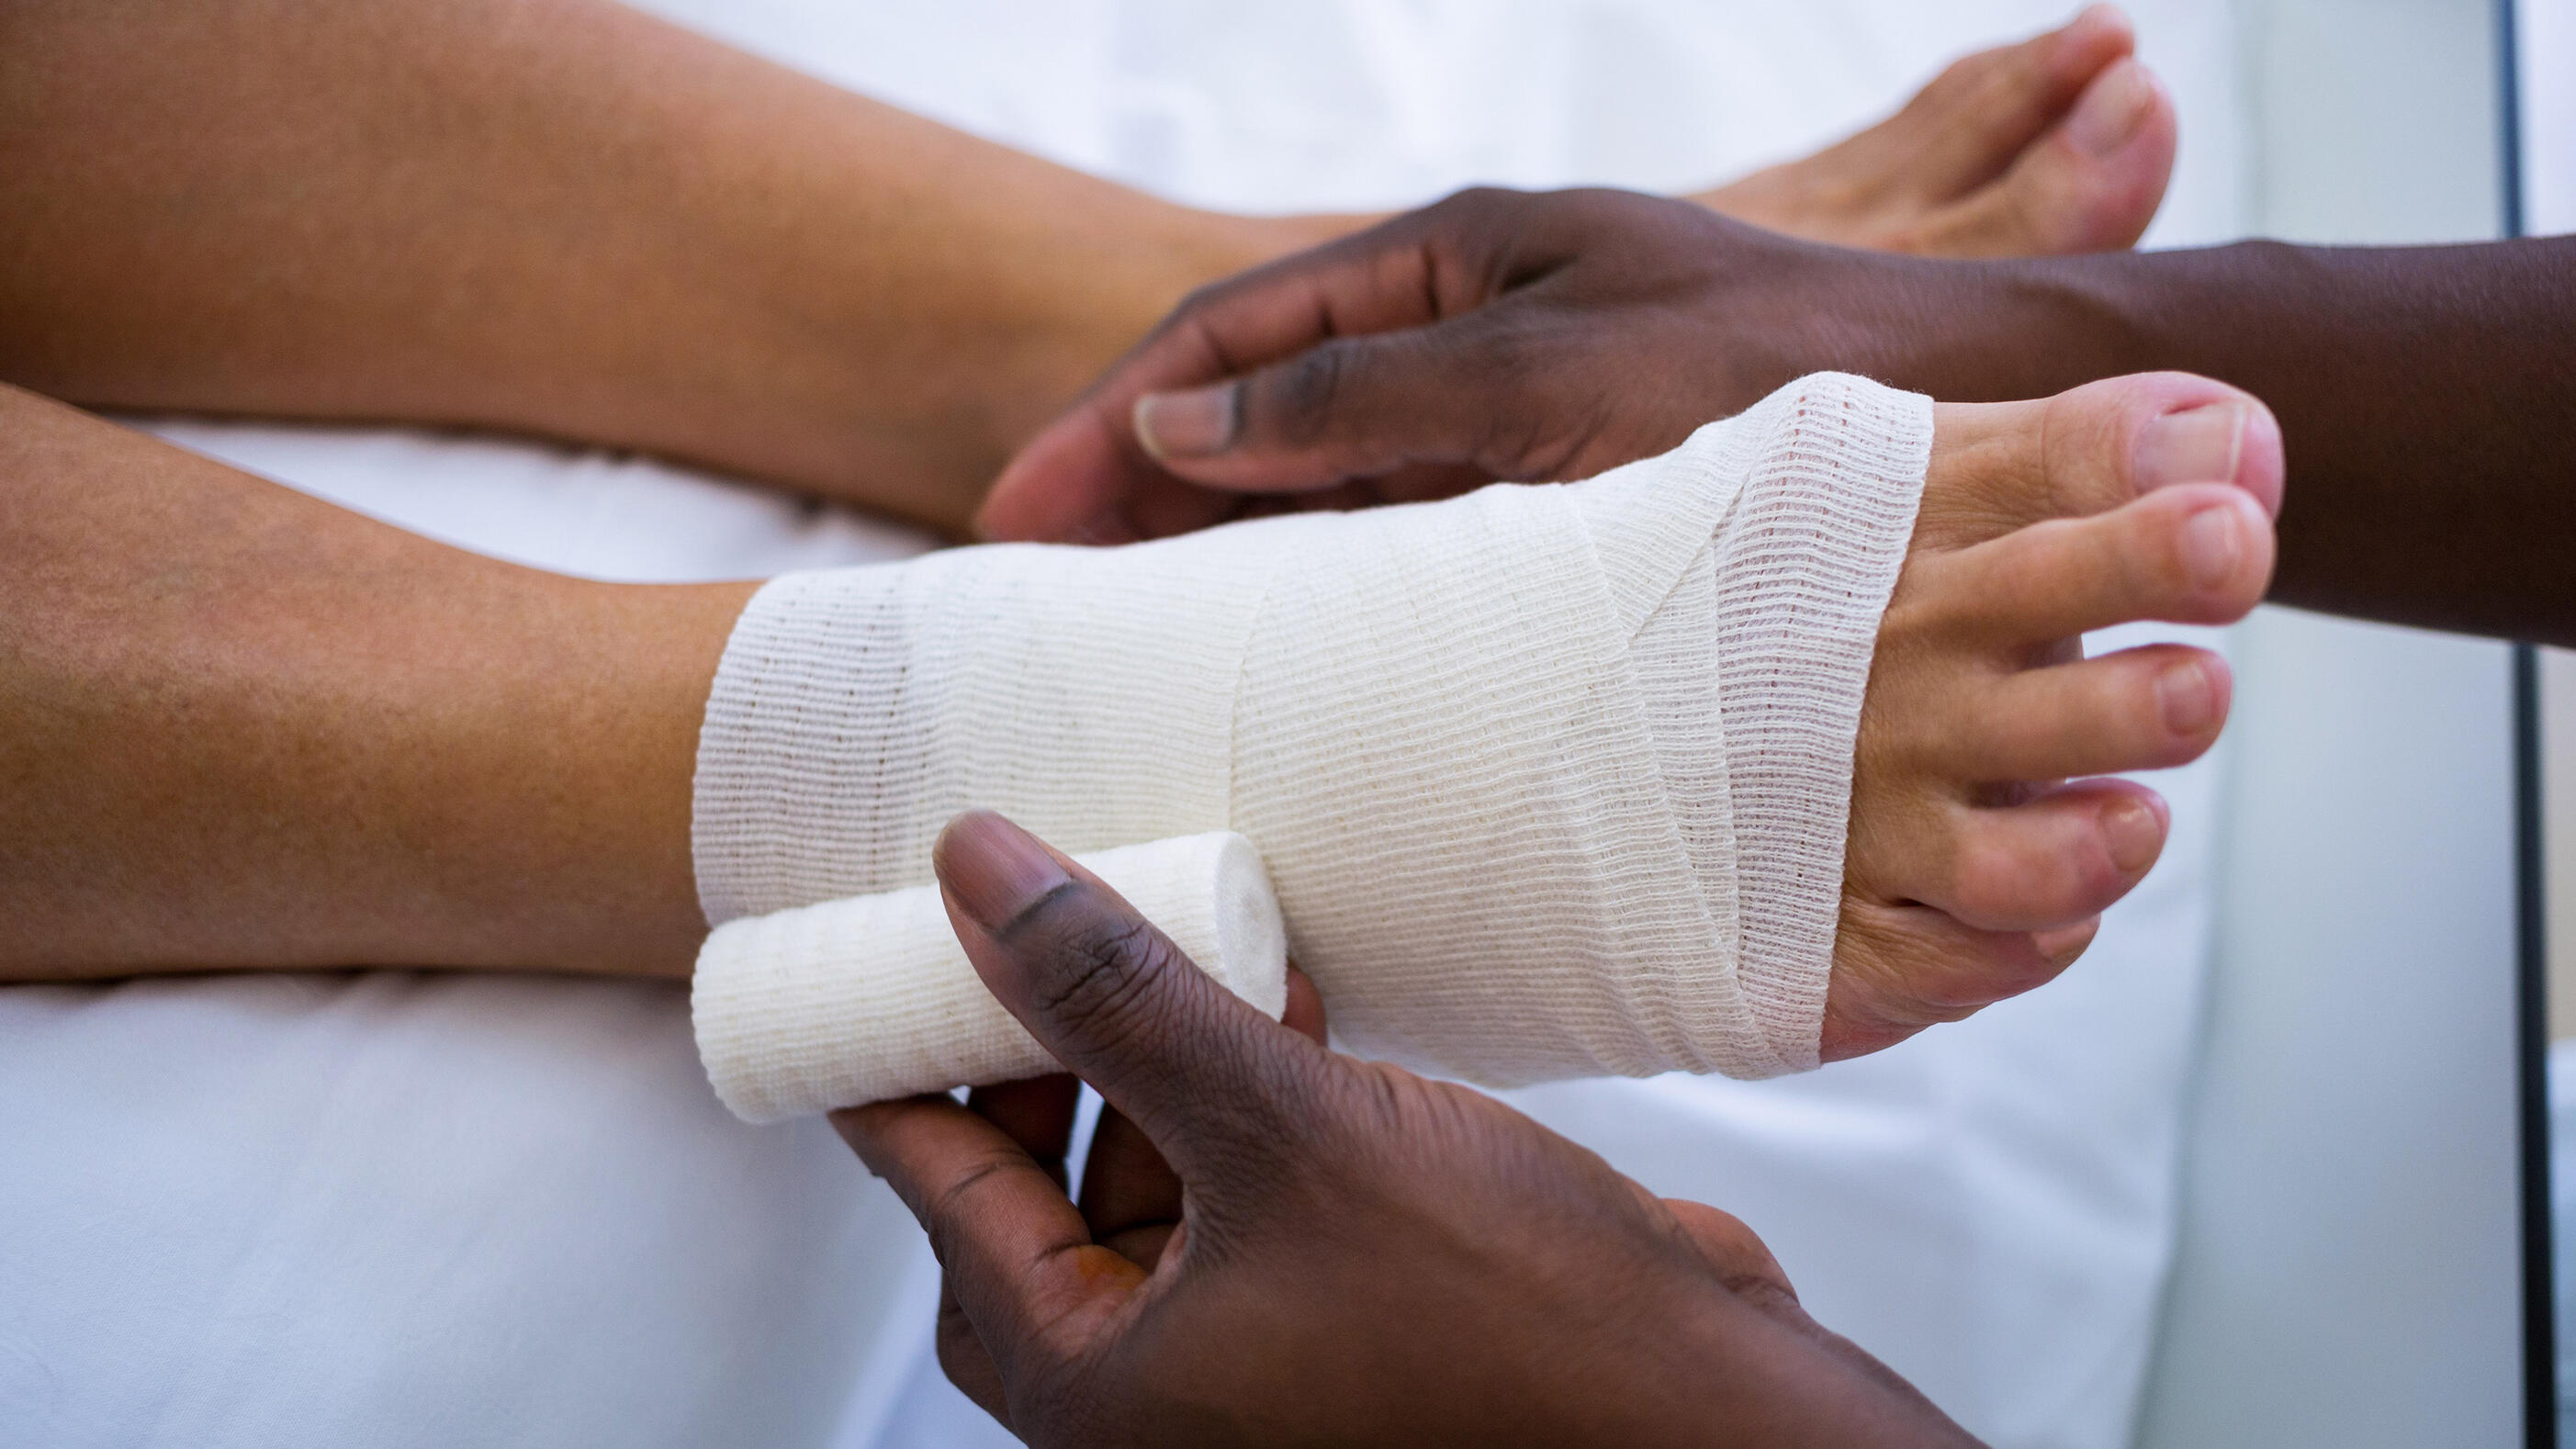 Doctor bandaging patients leg